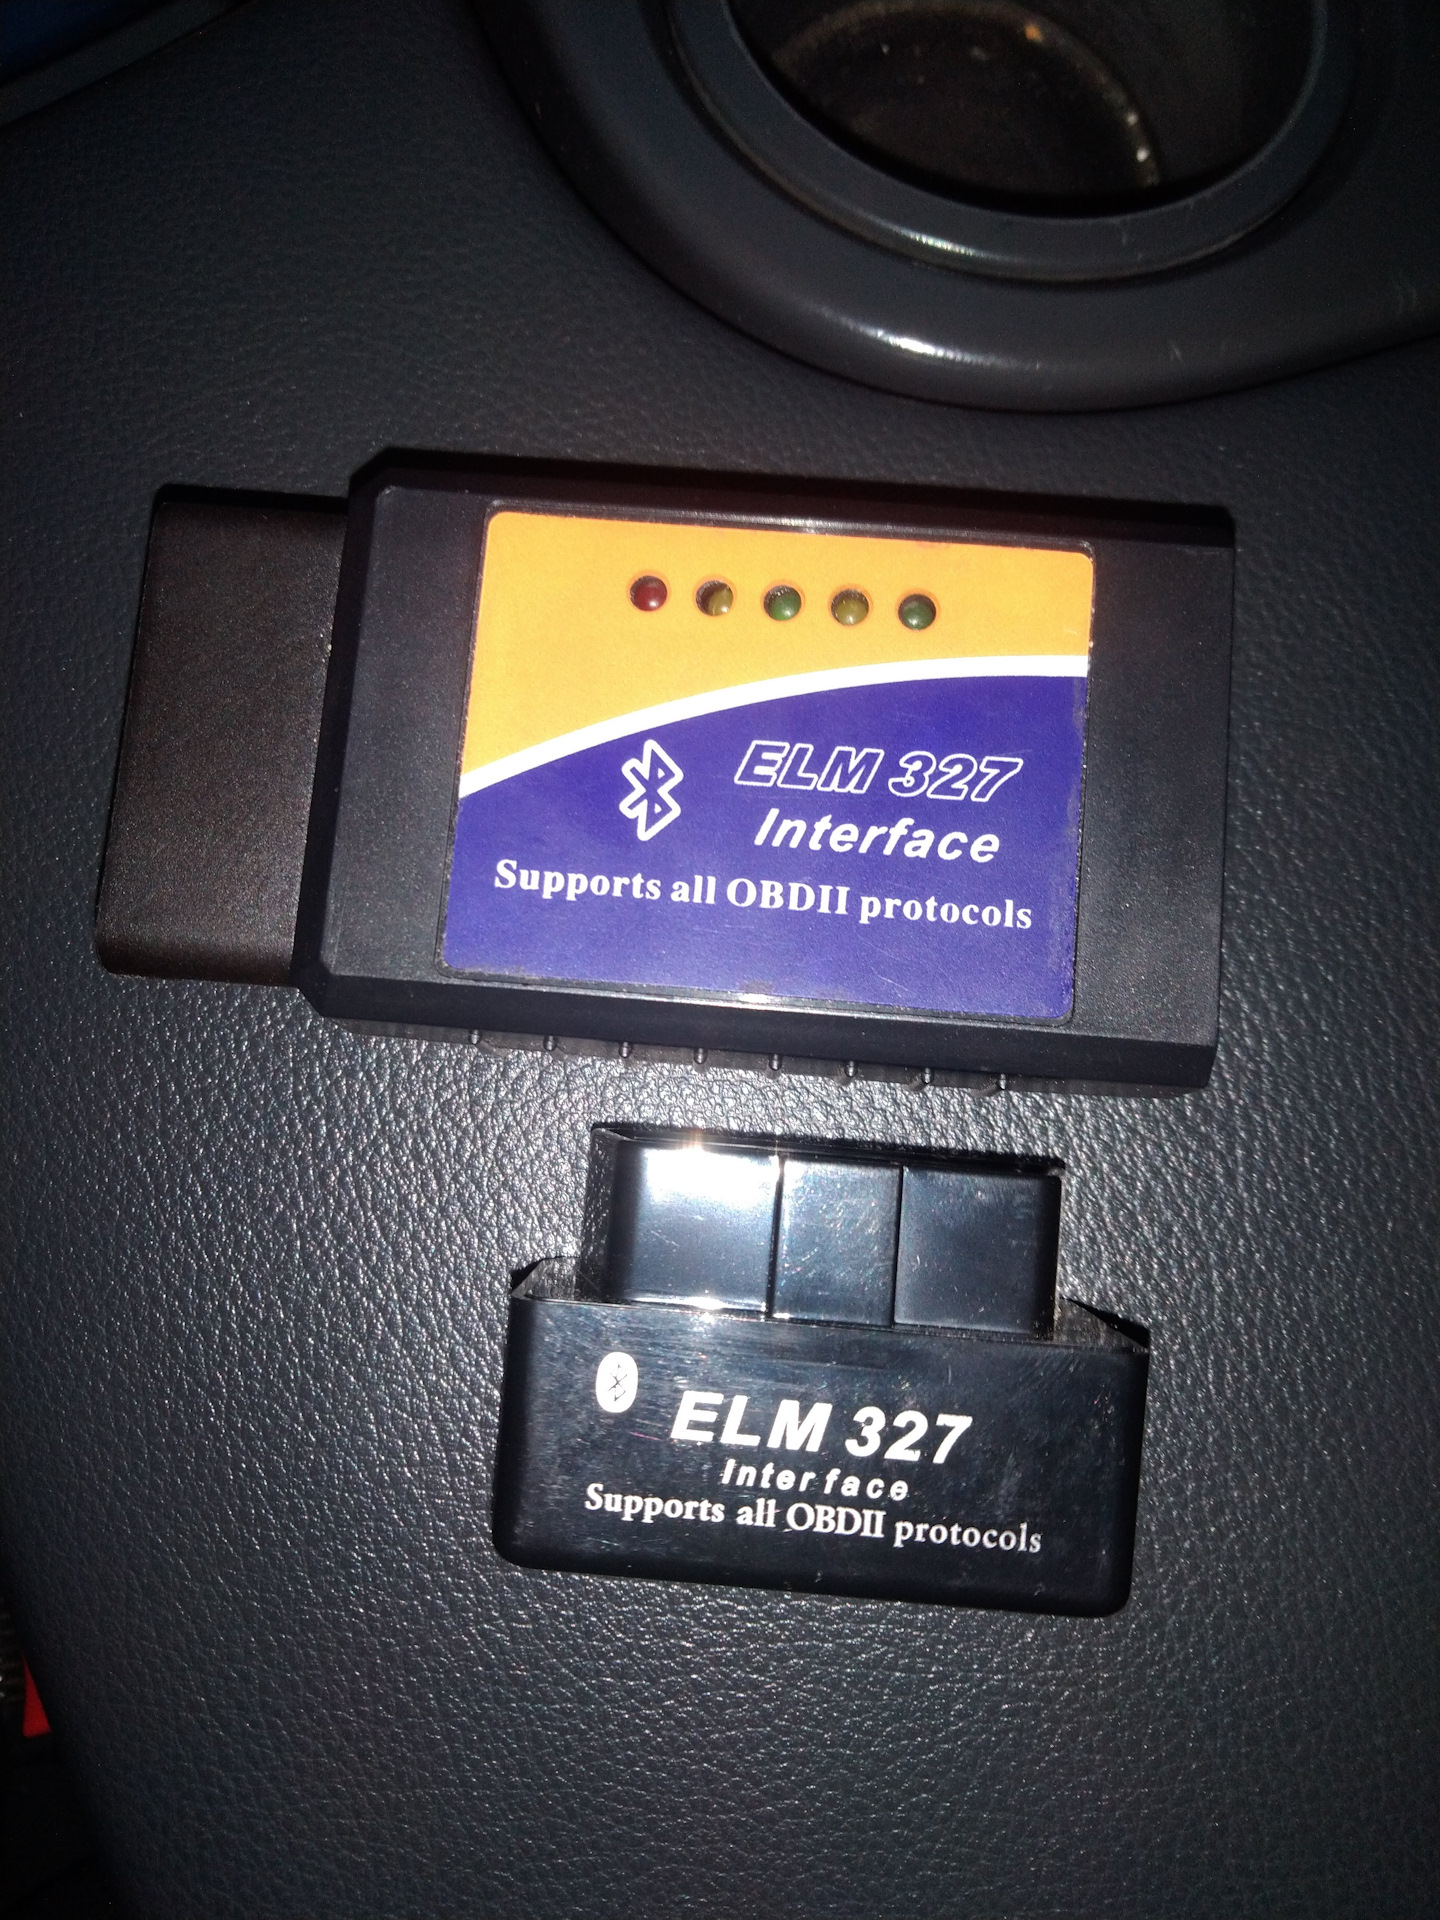 Elm327 interface